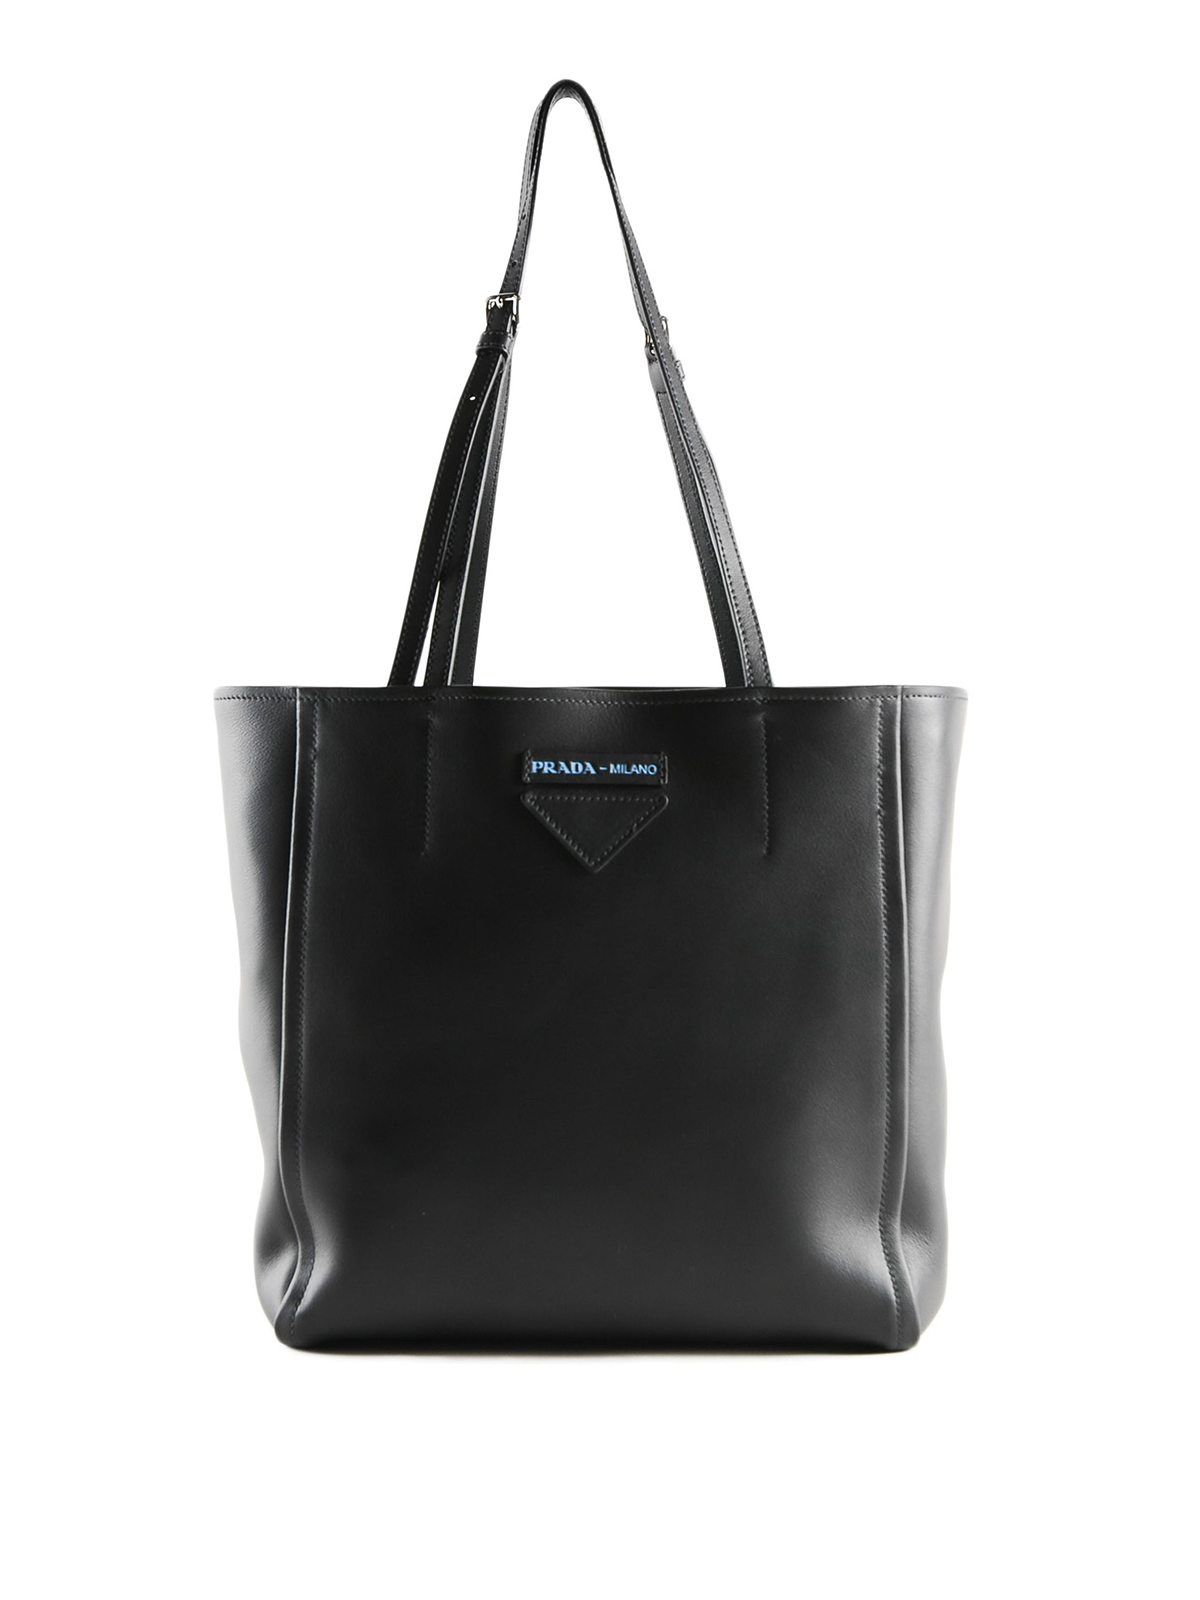 Small Black Leather Handbags | Paul Smith